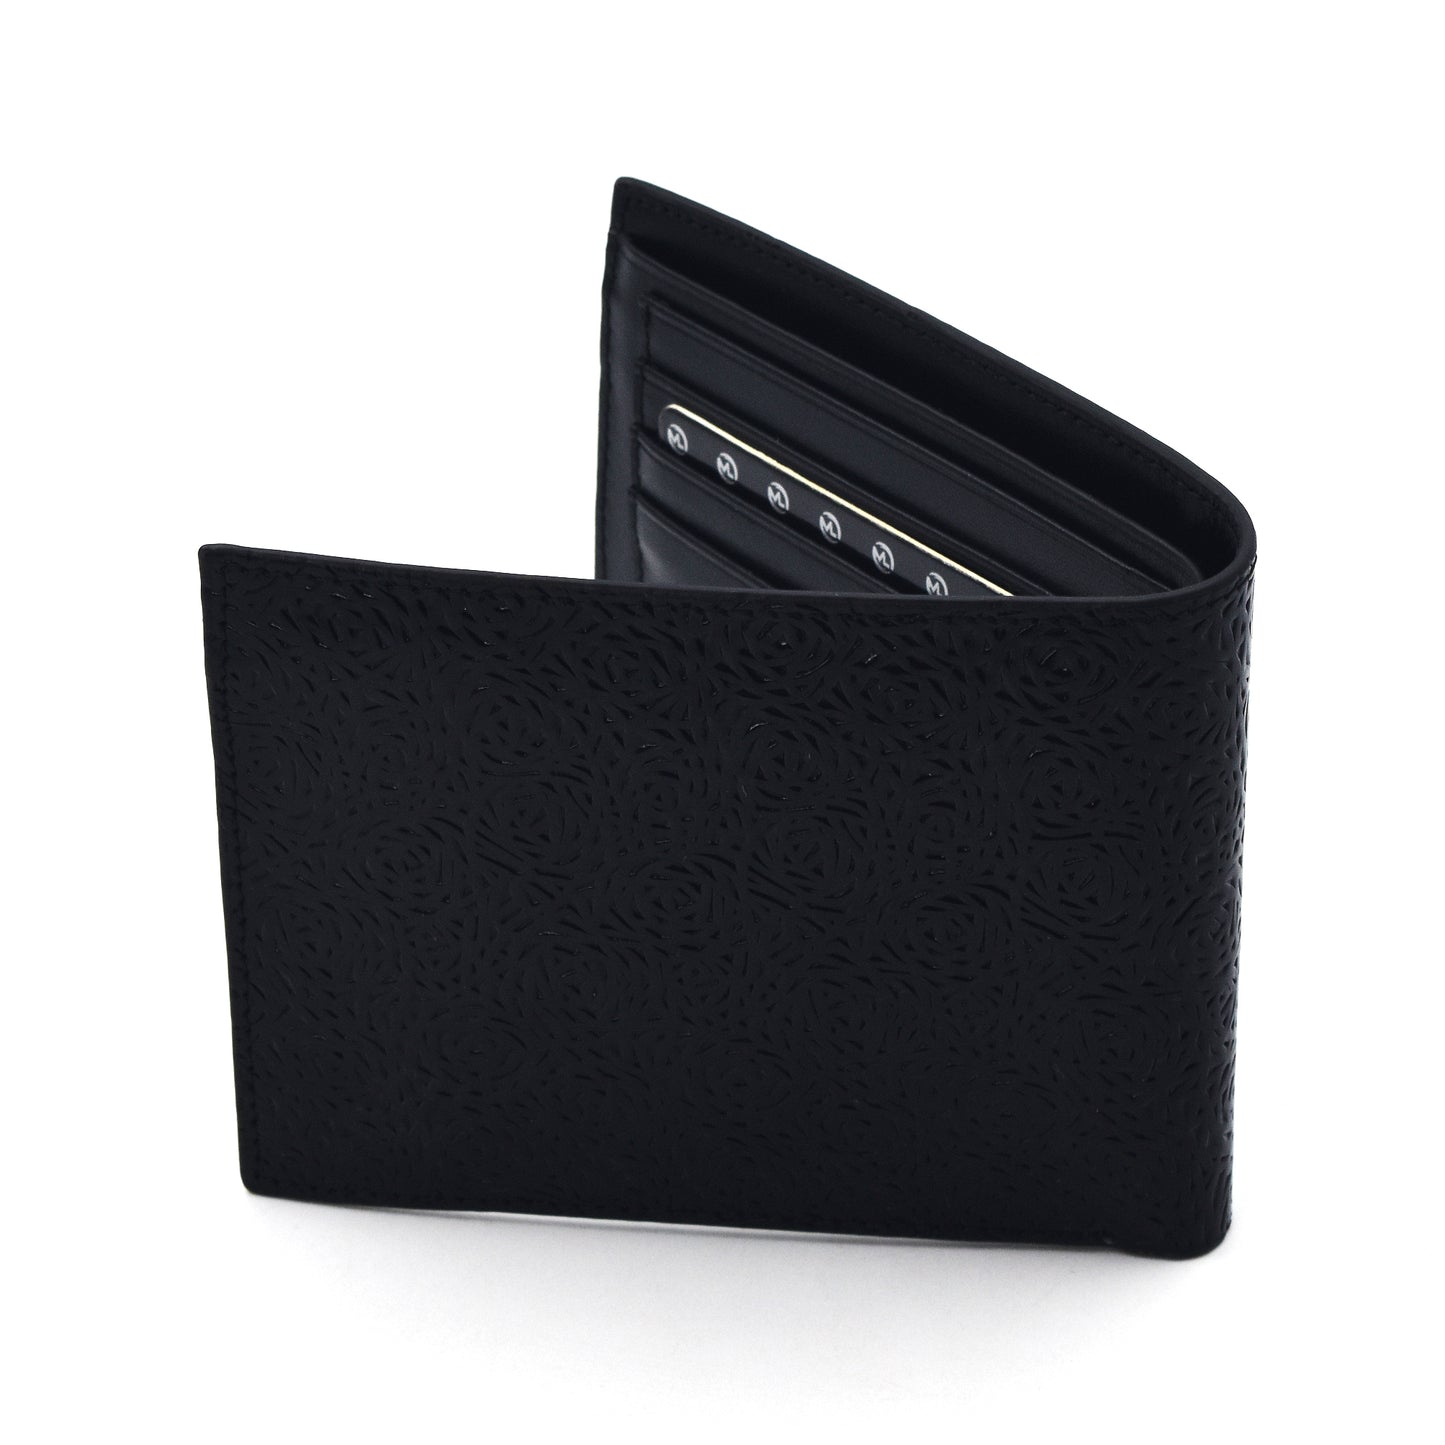 Pocket Size Wallet | Original Leather | Premium Quality | ORGN Wallet 39